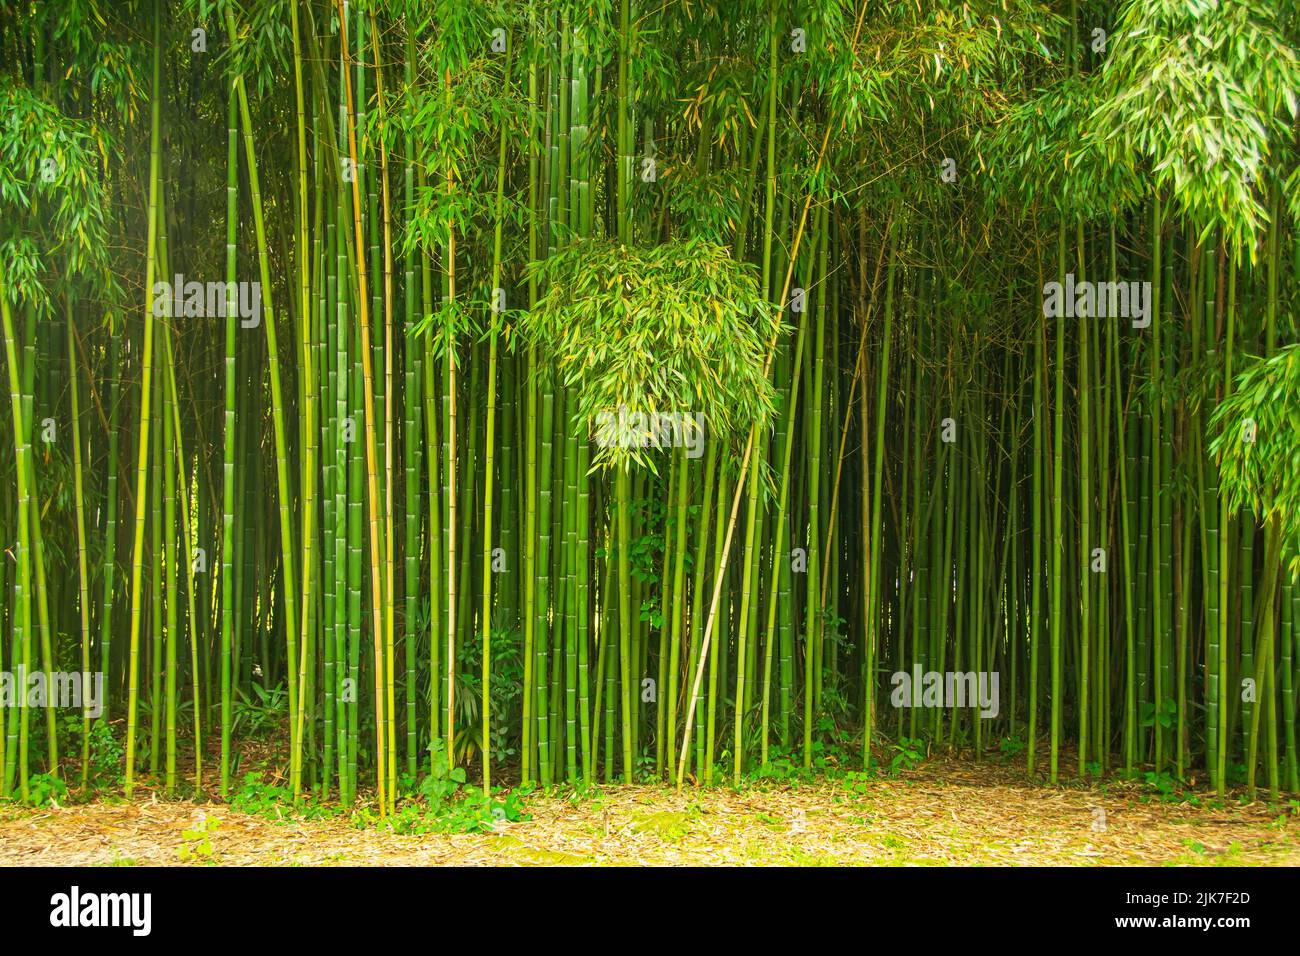 Hermosos matorrales de bambú en el parque, fondo de textura natural Foto de stock